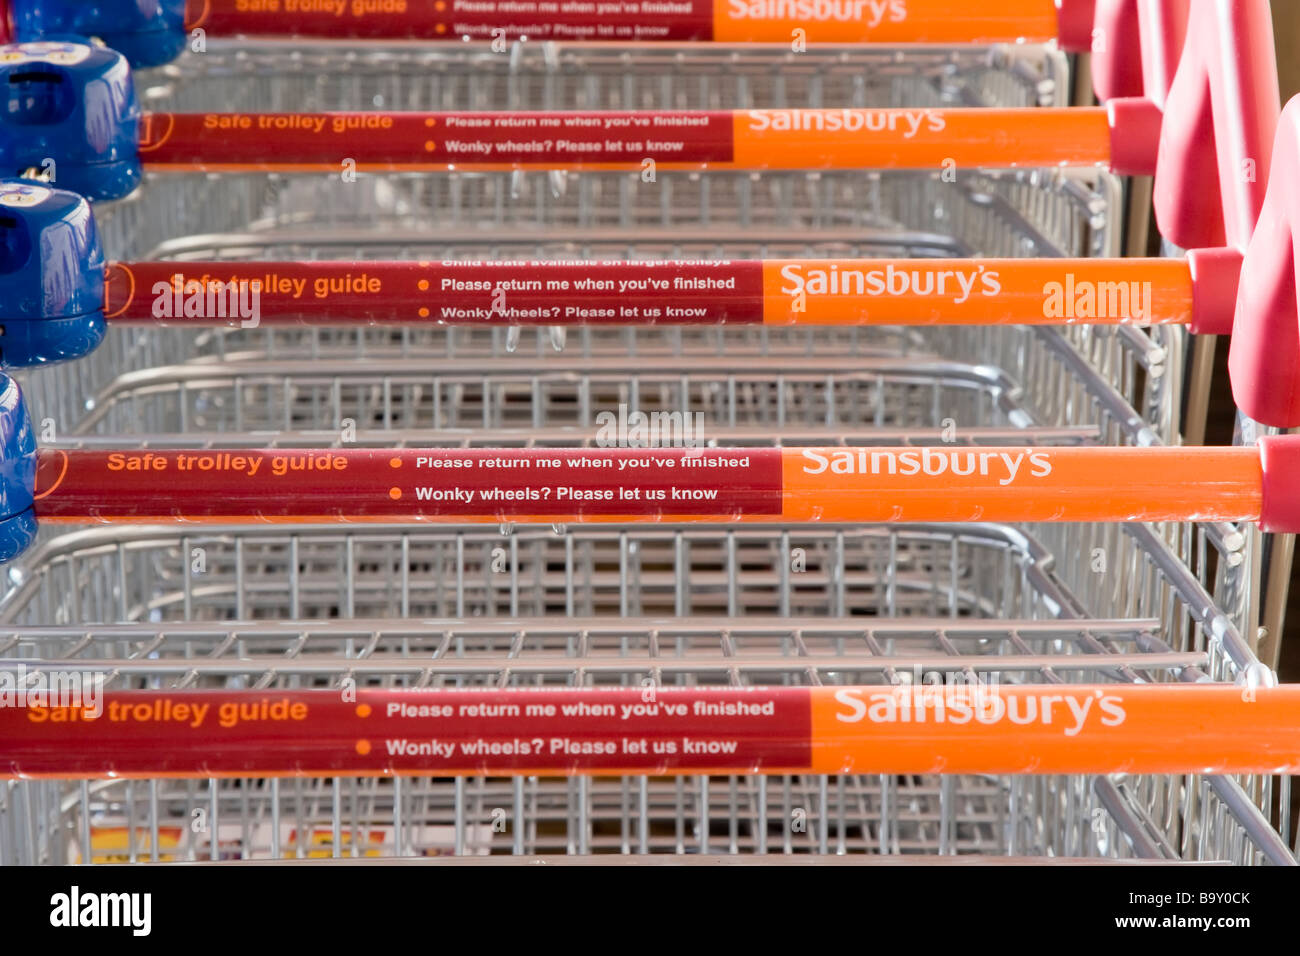 A row of Sainsbury's supermarket trolleys Stock Photo